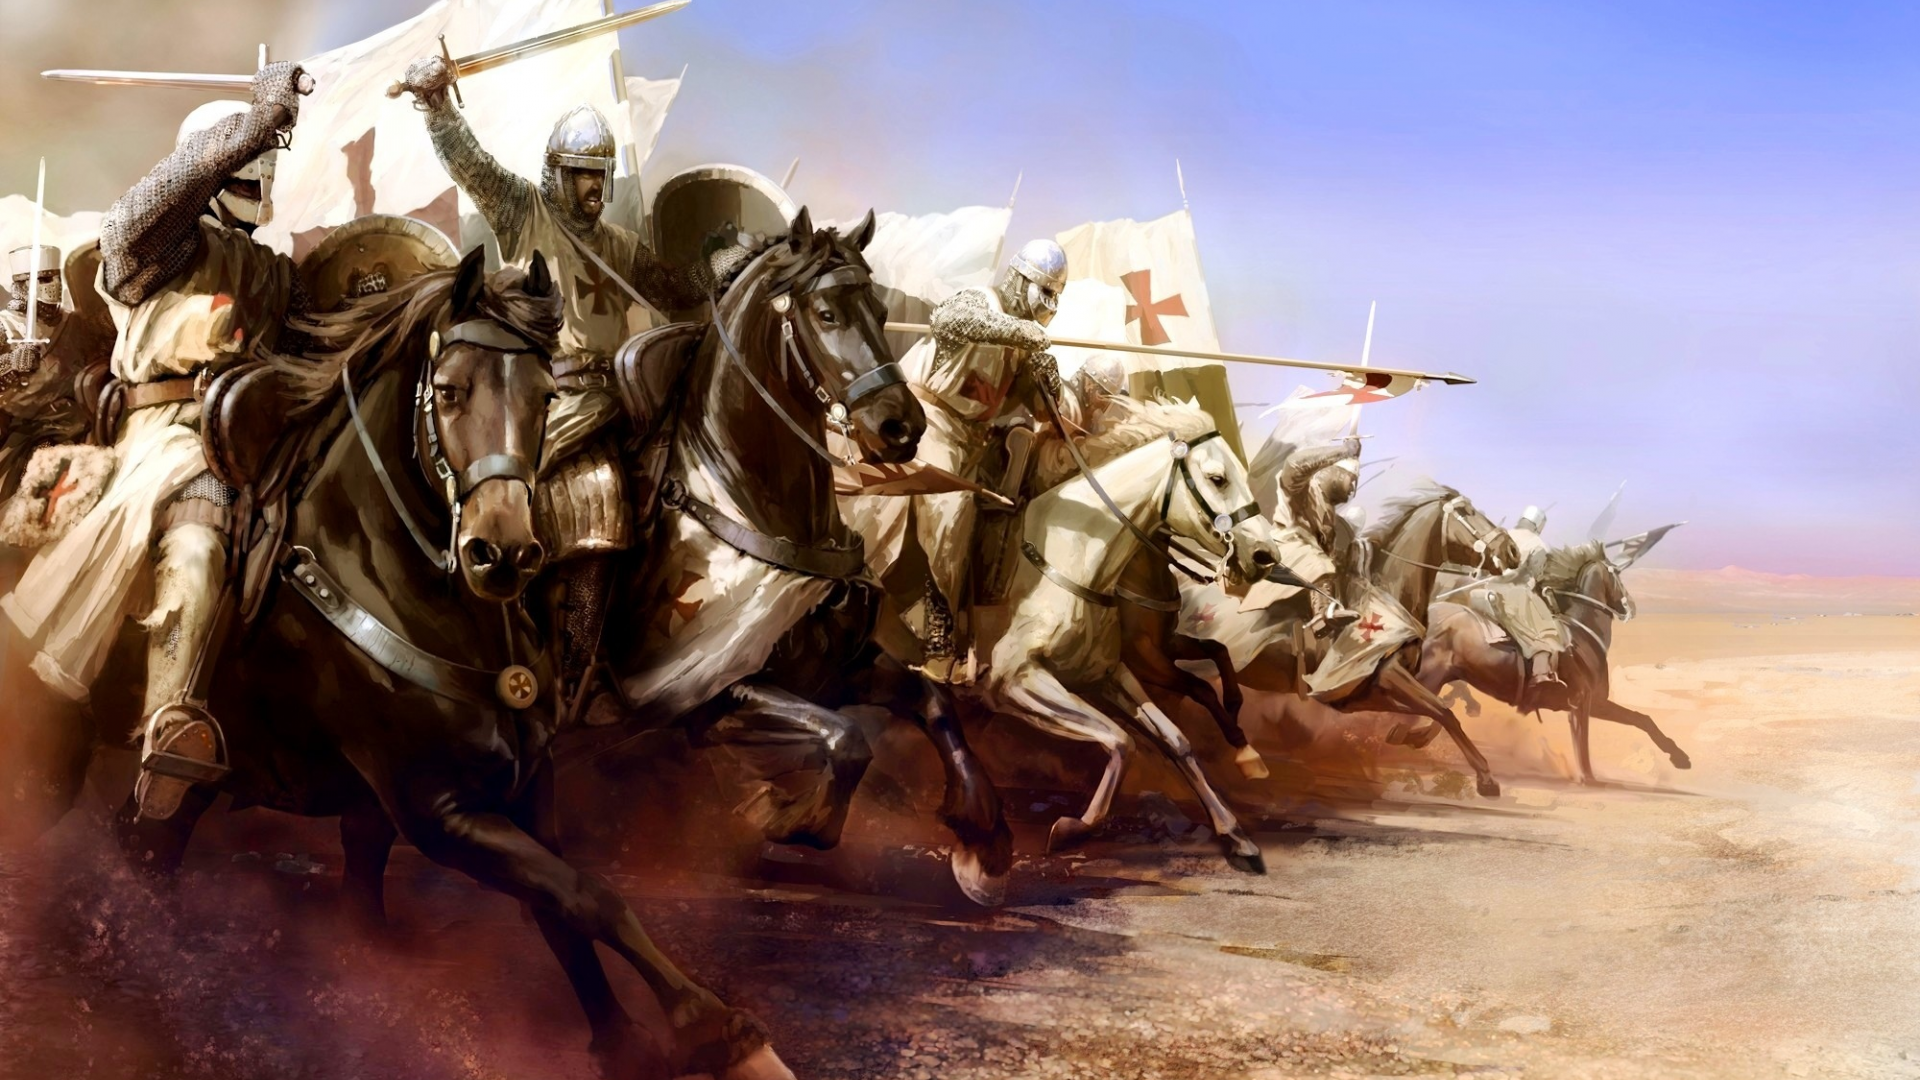 арт, 25 ноября 1177 года, битва при монжизаре, израиль